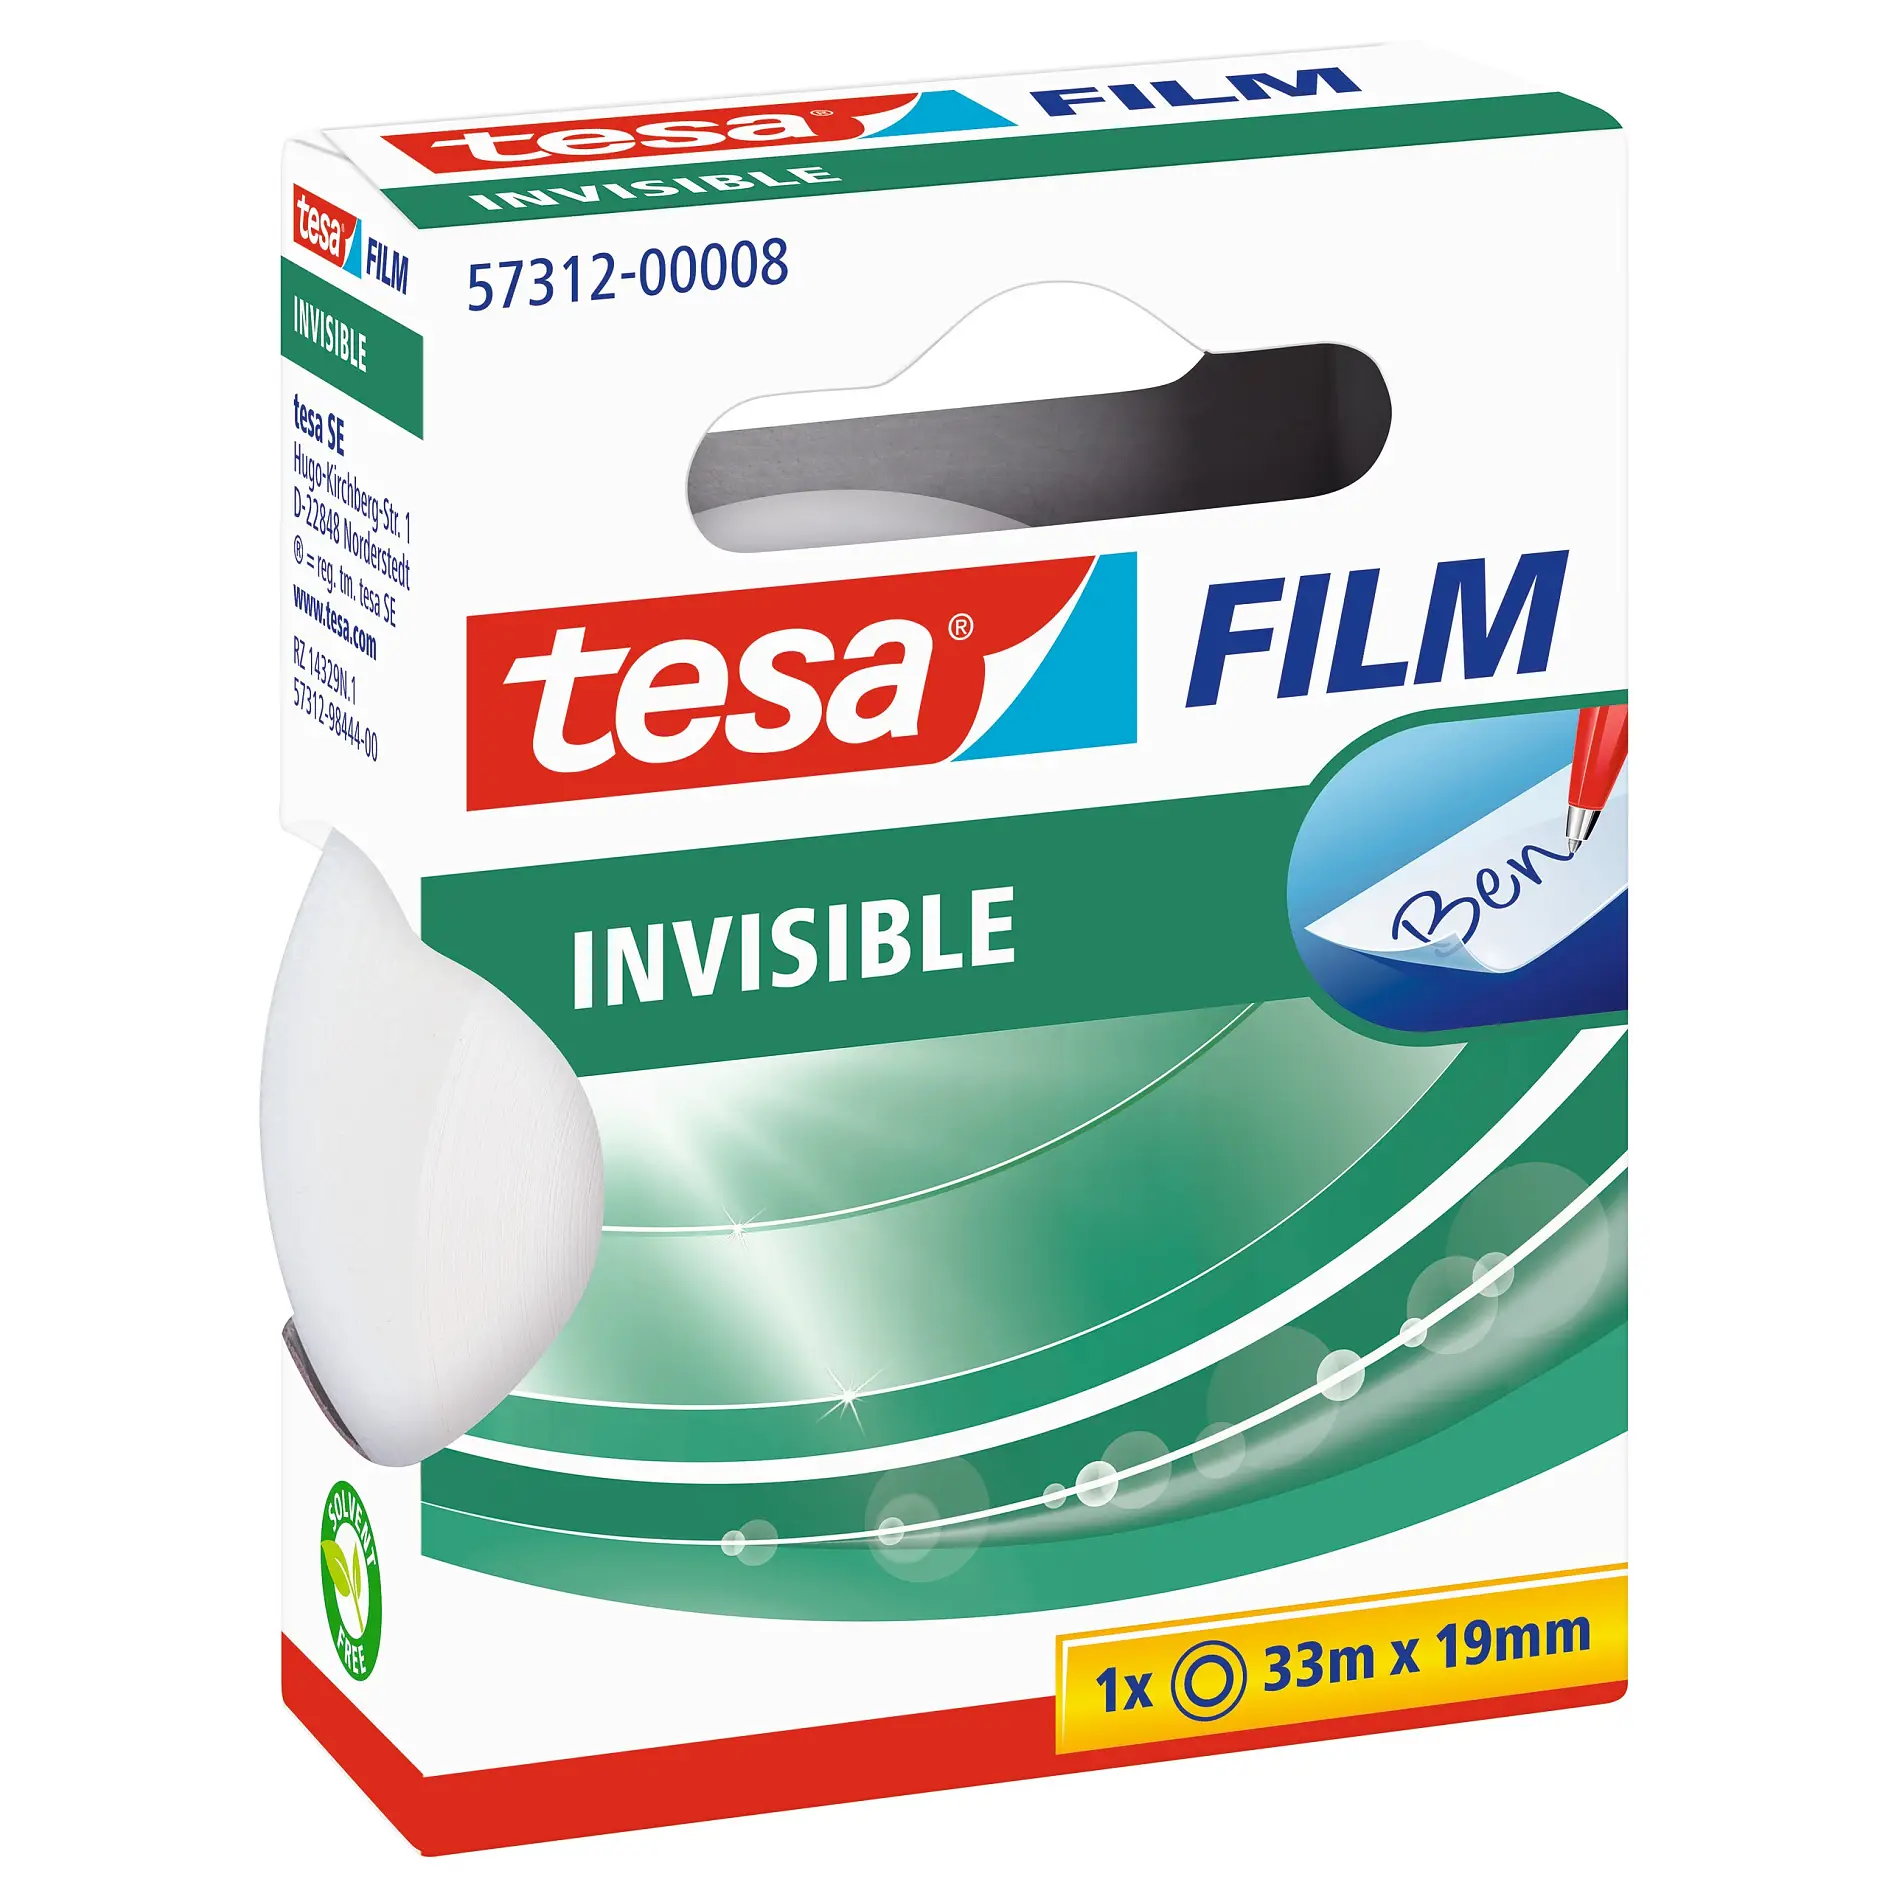 [en-en] 1 x tesafilm Invisible 33m x 19mm, Hfb